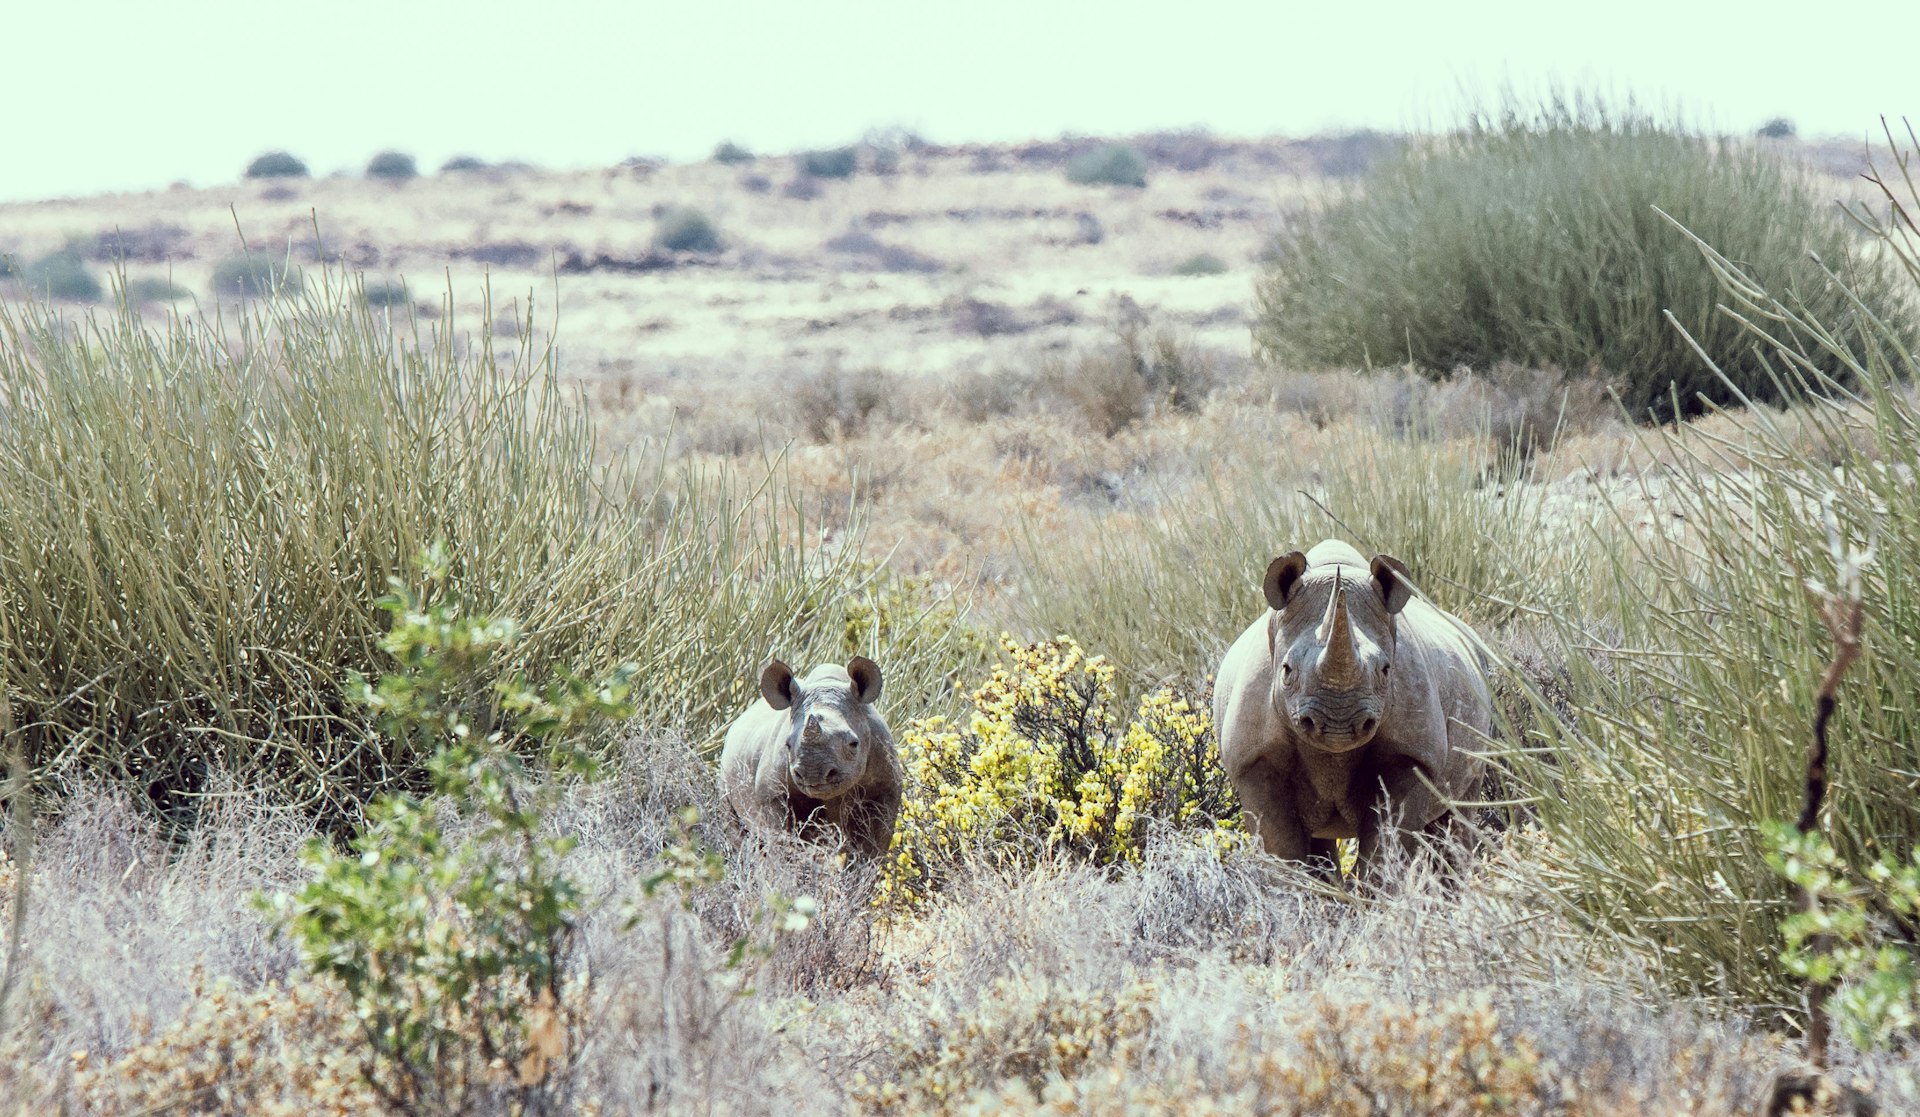 Two rhinos standing in grassland